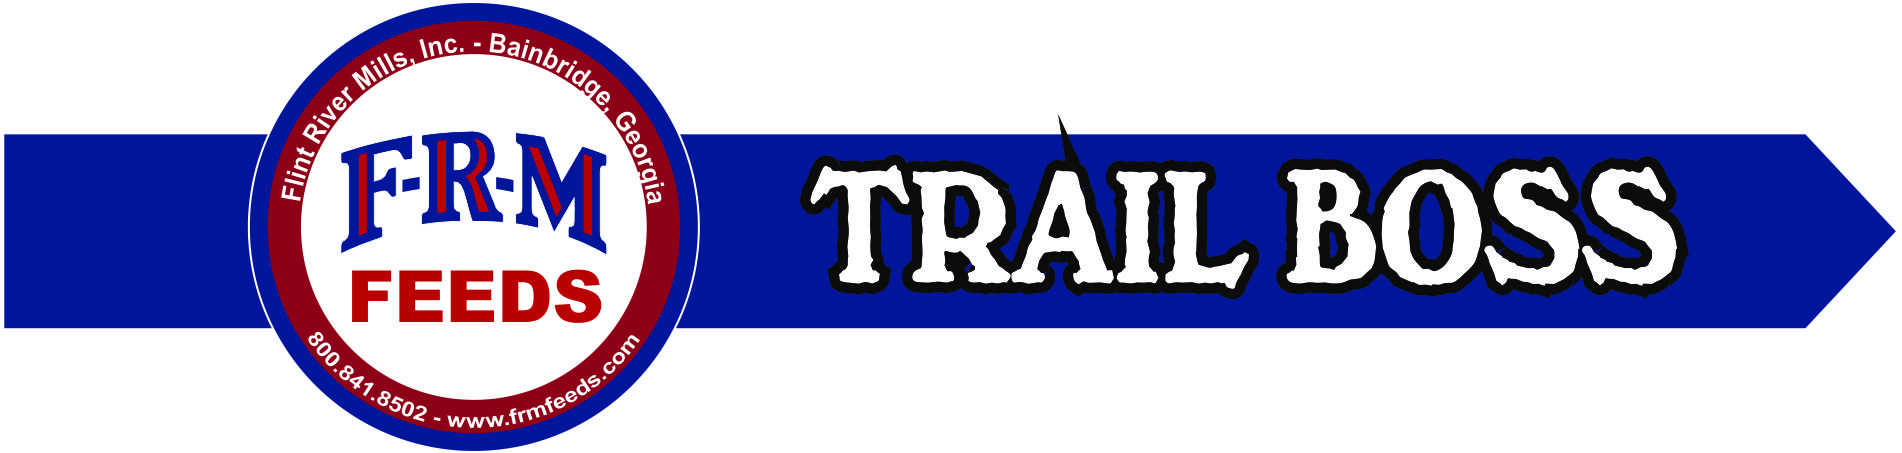 Trail Boss Logo - Horizontal